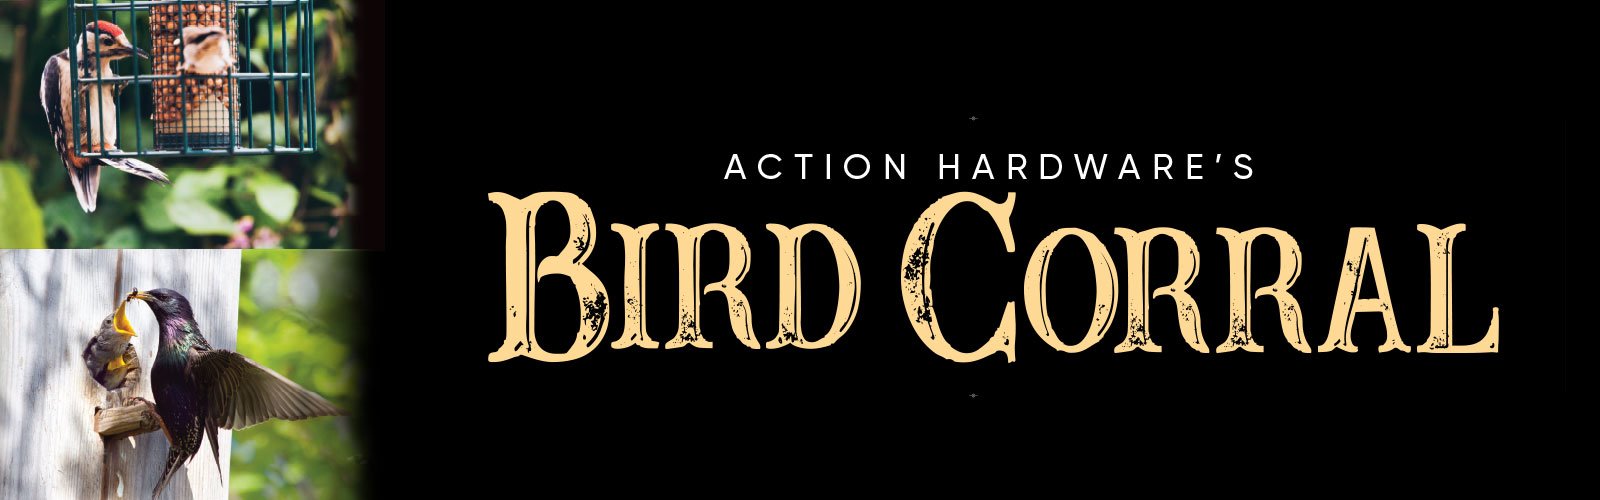 Action Hardware Bird Corral